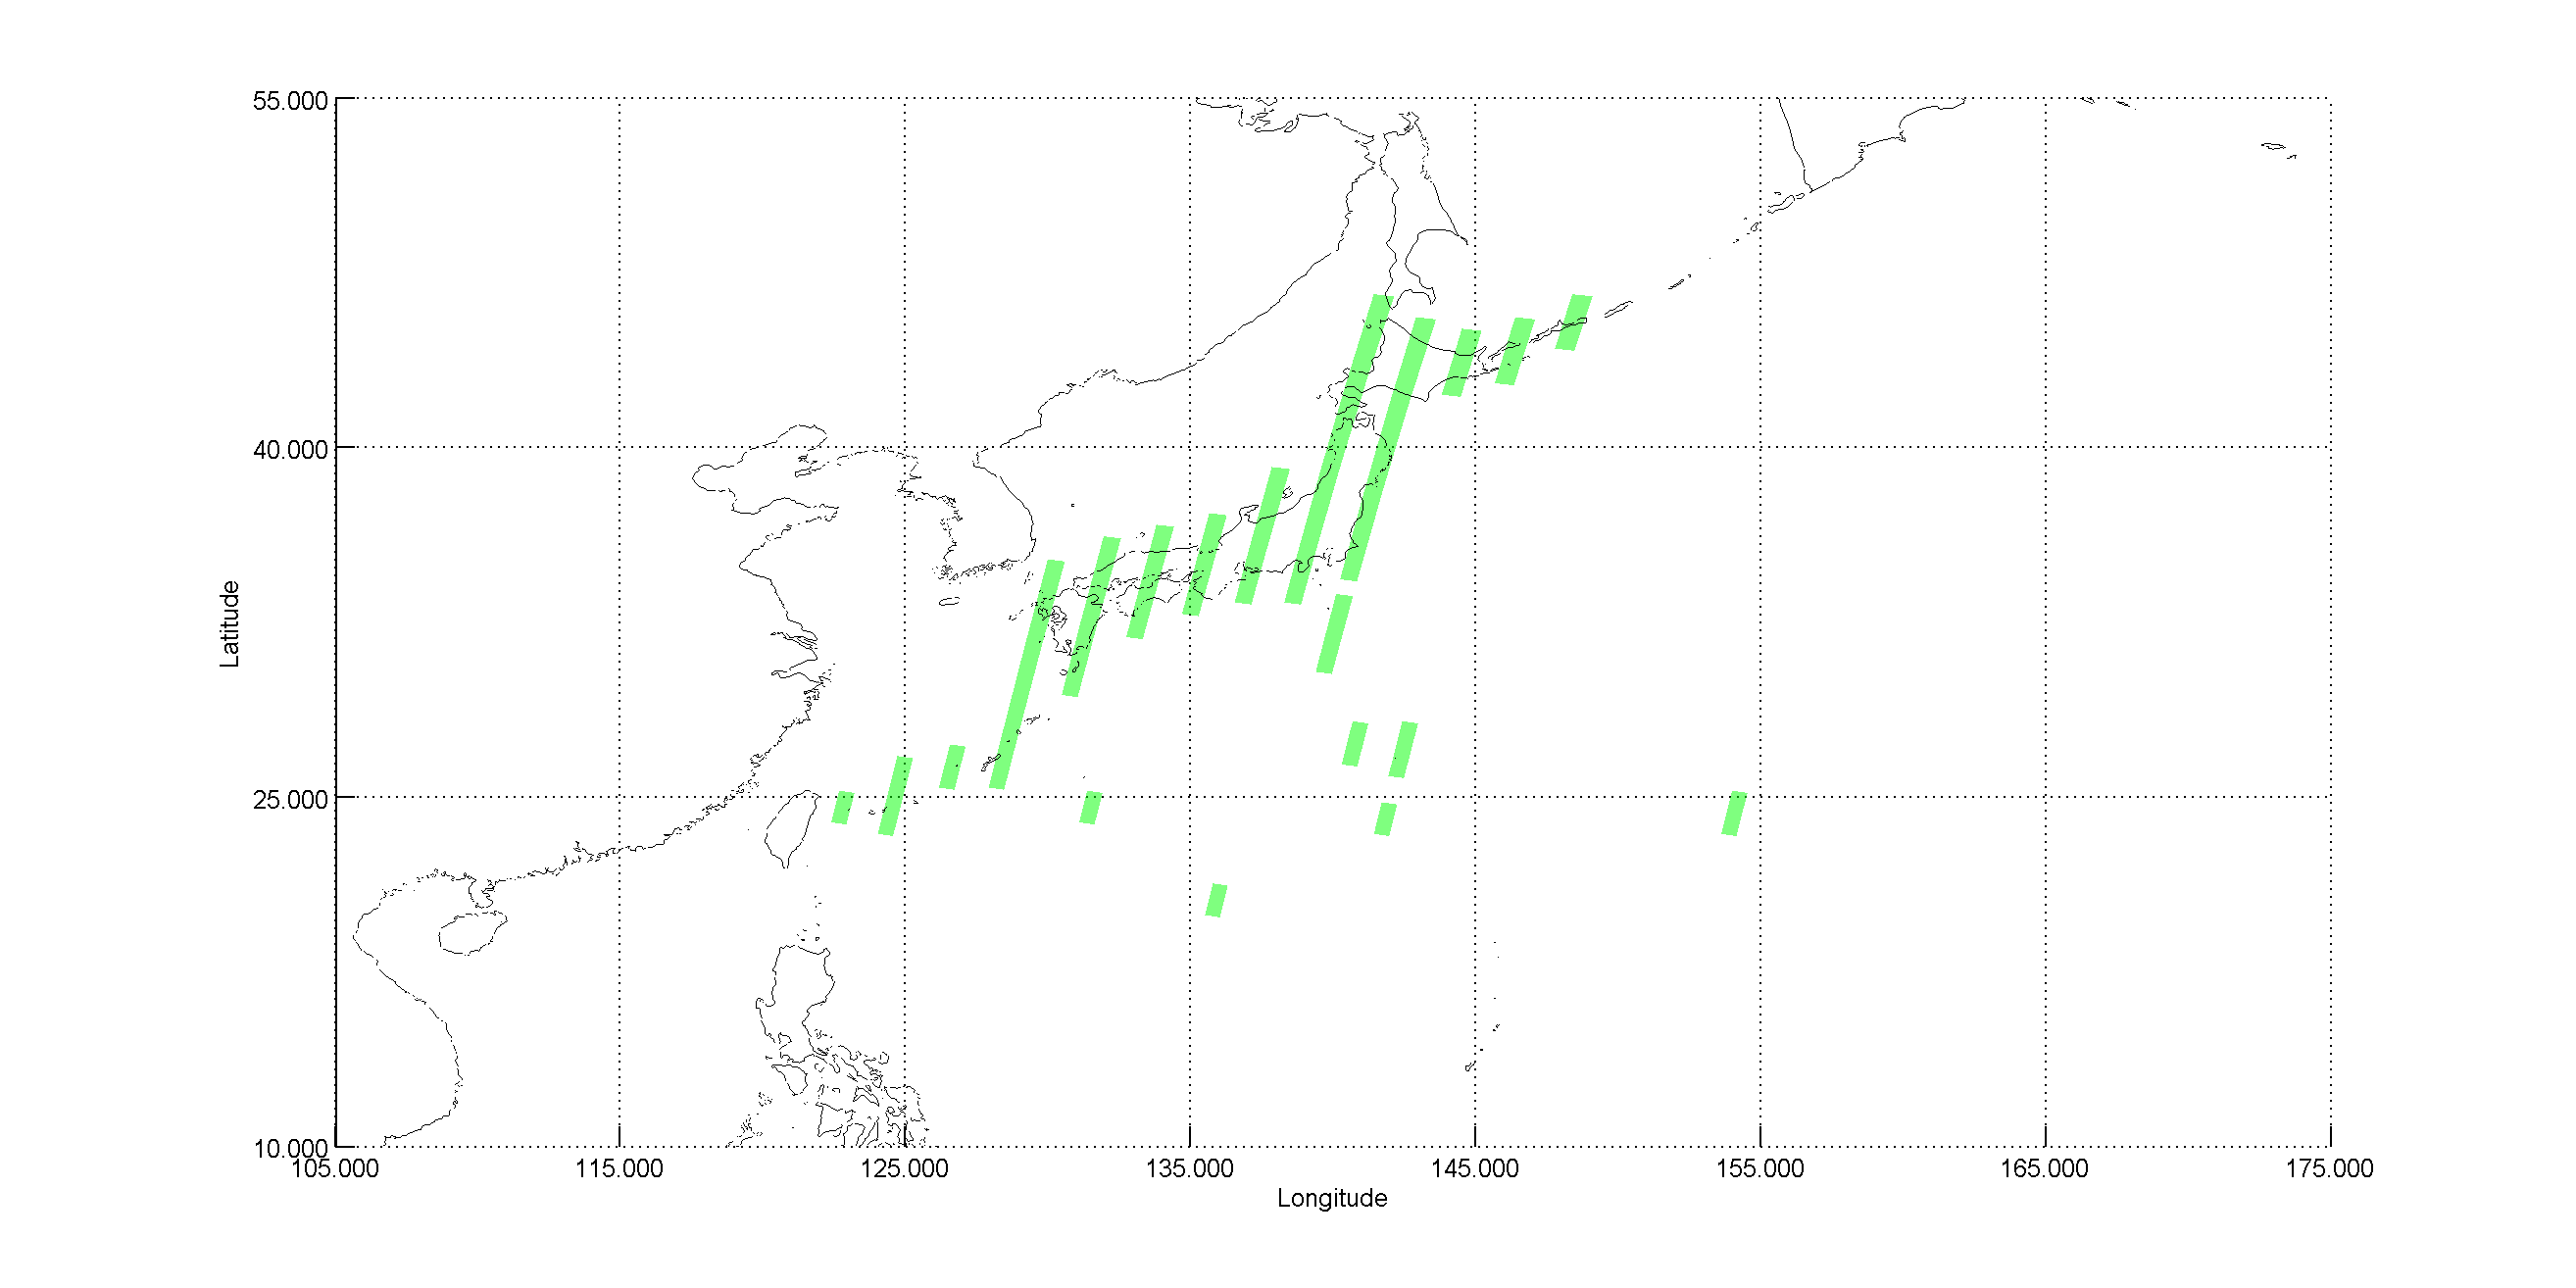 CYCLE_146 - Japan Descending passes